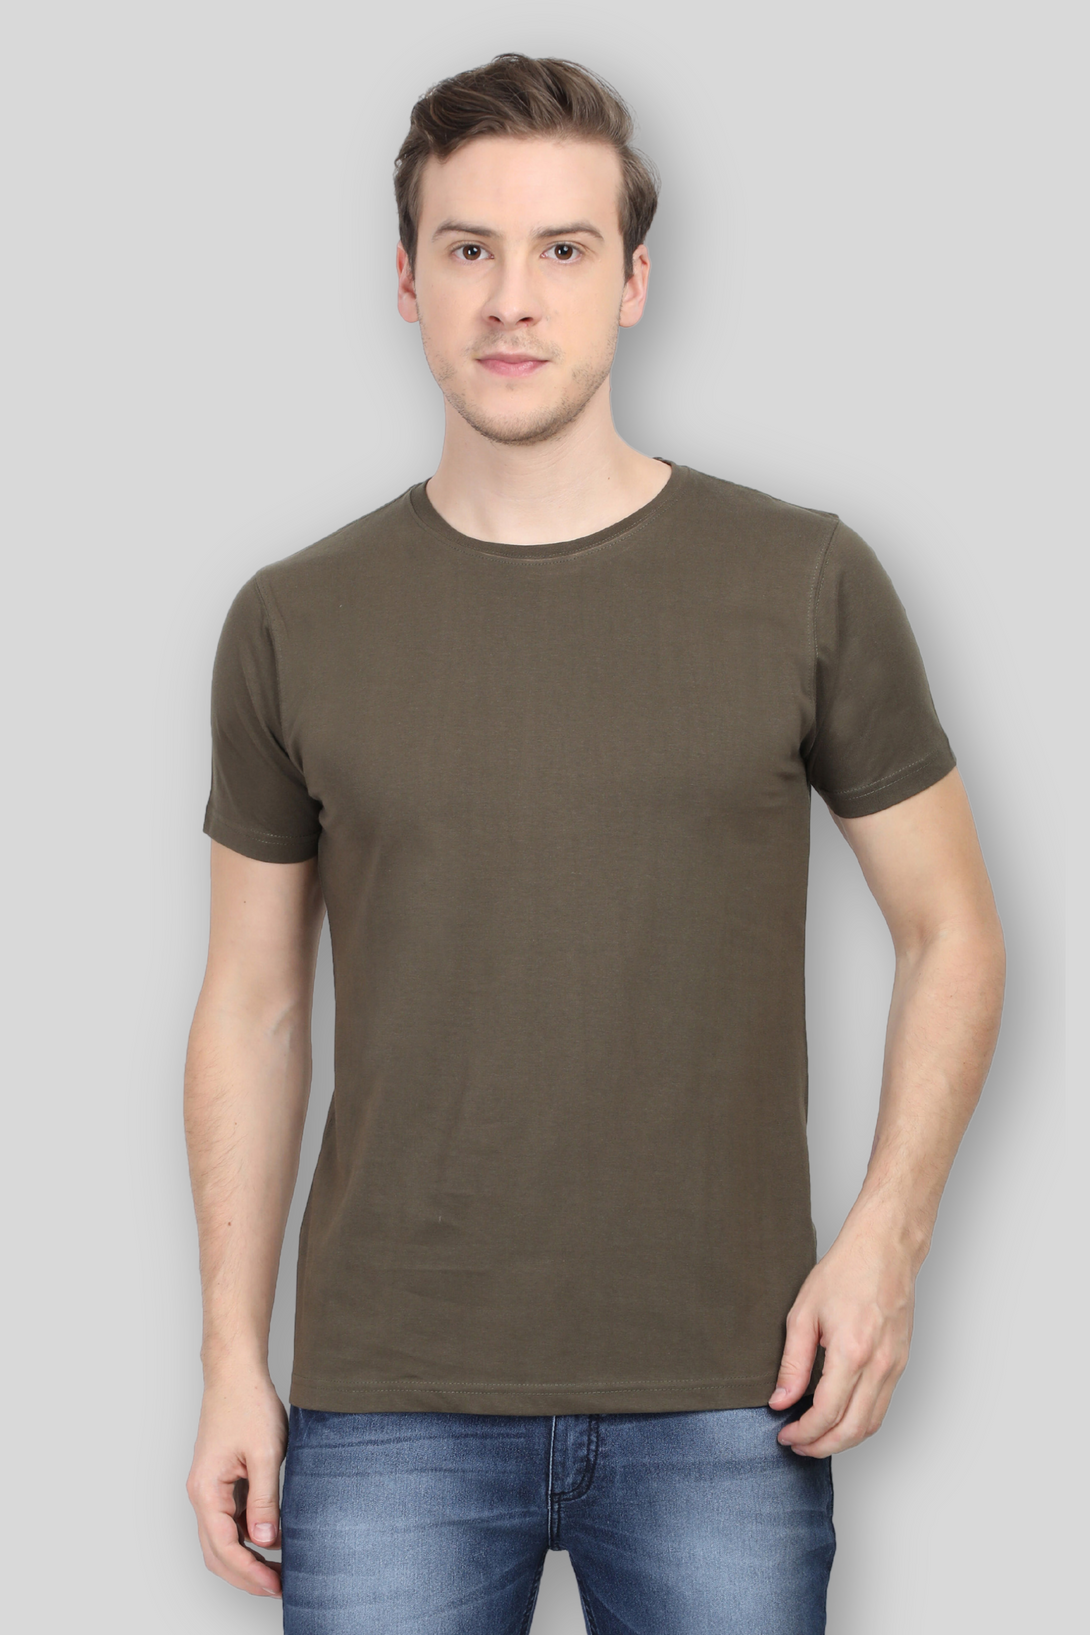 Olive Green T-Shirt For Men - WowWaves - 2